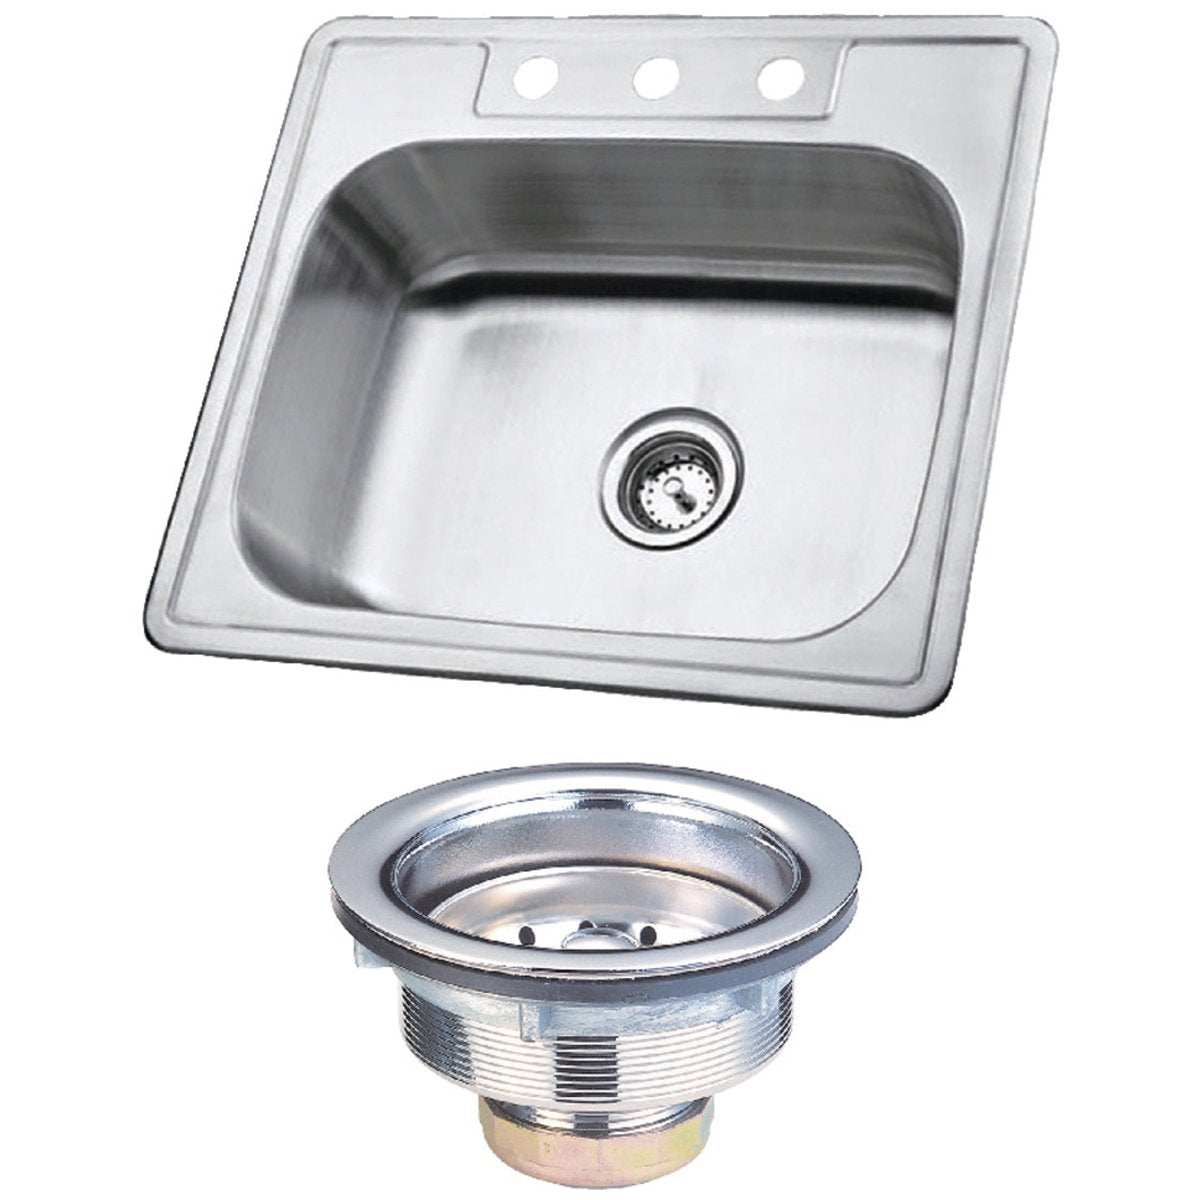 Kingston Brass Stainless Steel Self-Rimming Single Bowl Kitchen Sink